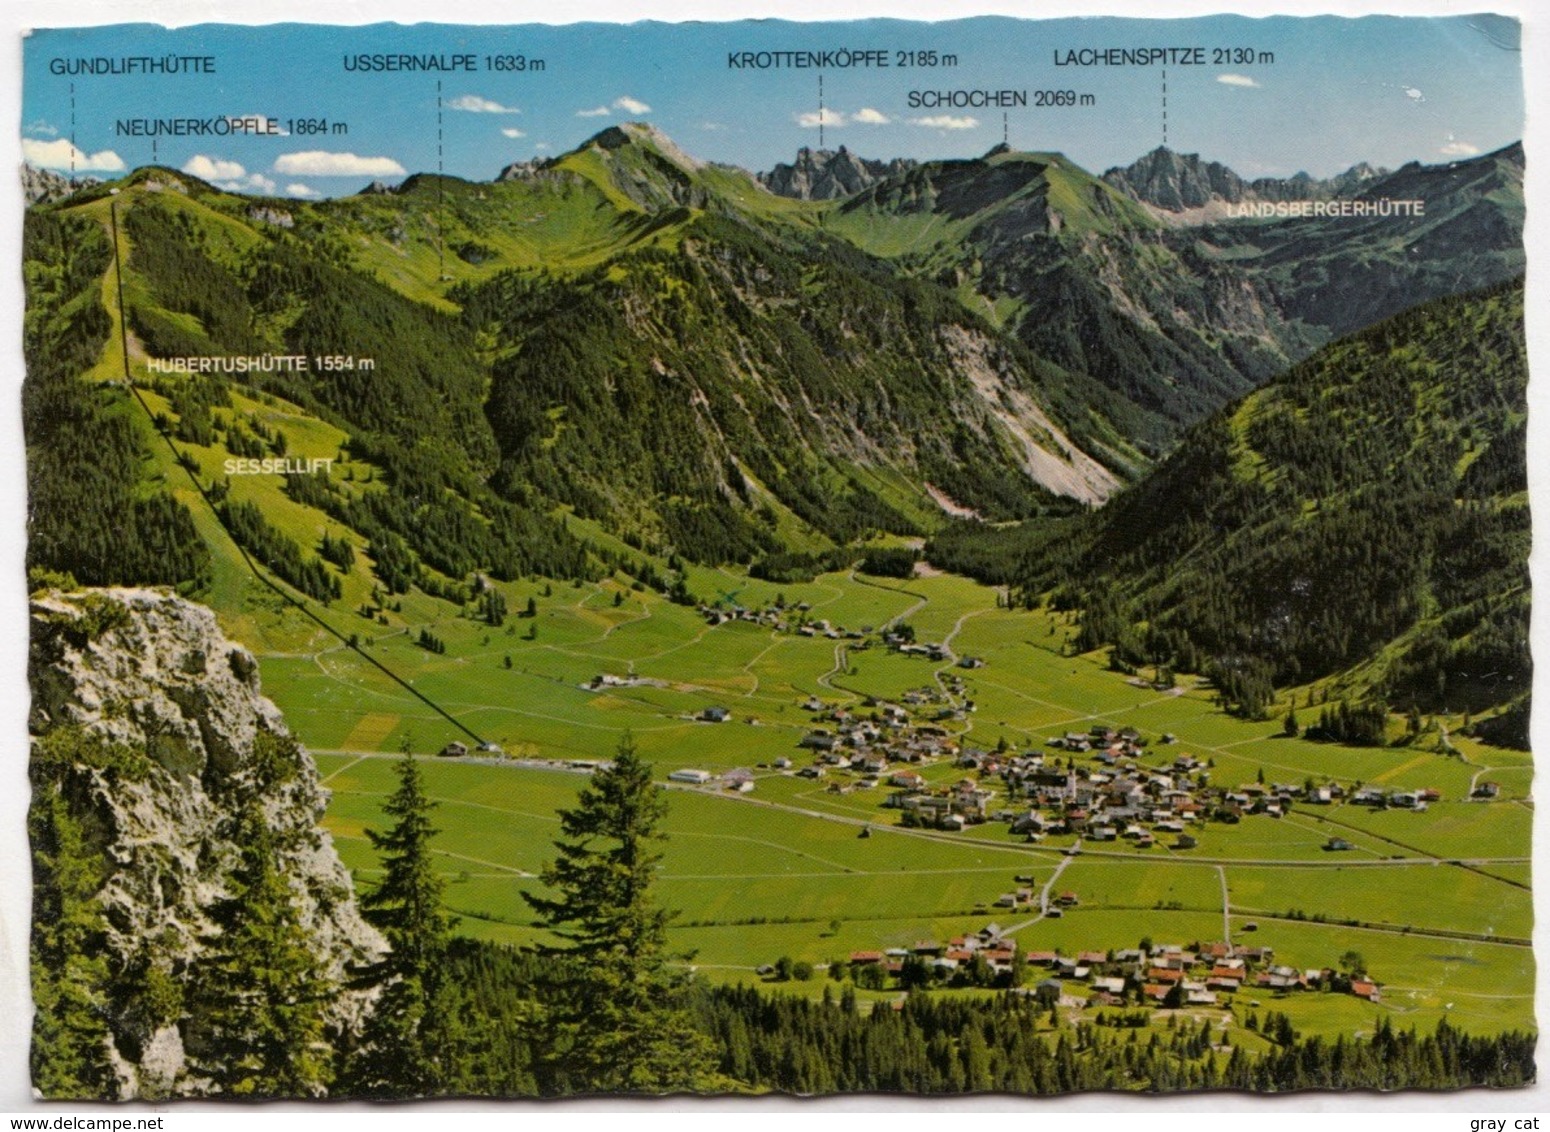 Tannheim In Tirol, 1111m, Austria, 1980 Used Postcard [23479] - Tannheim